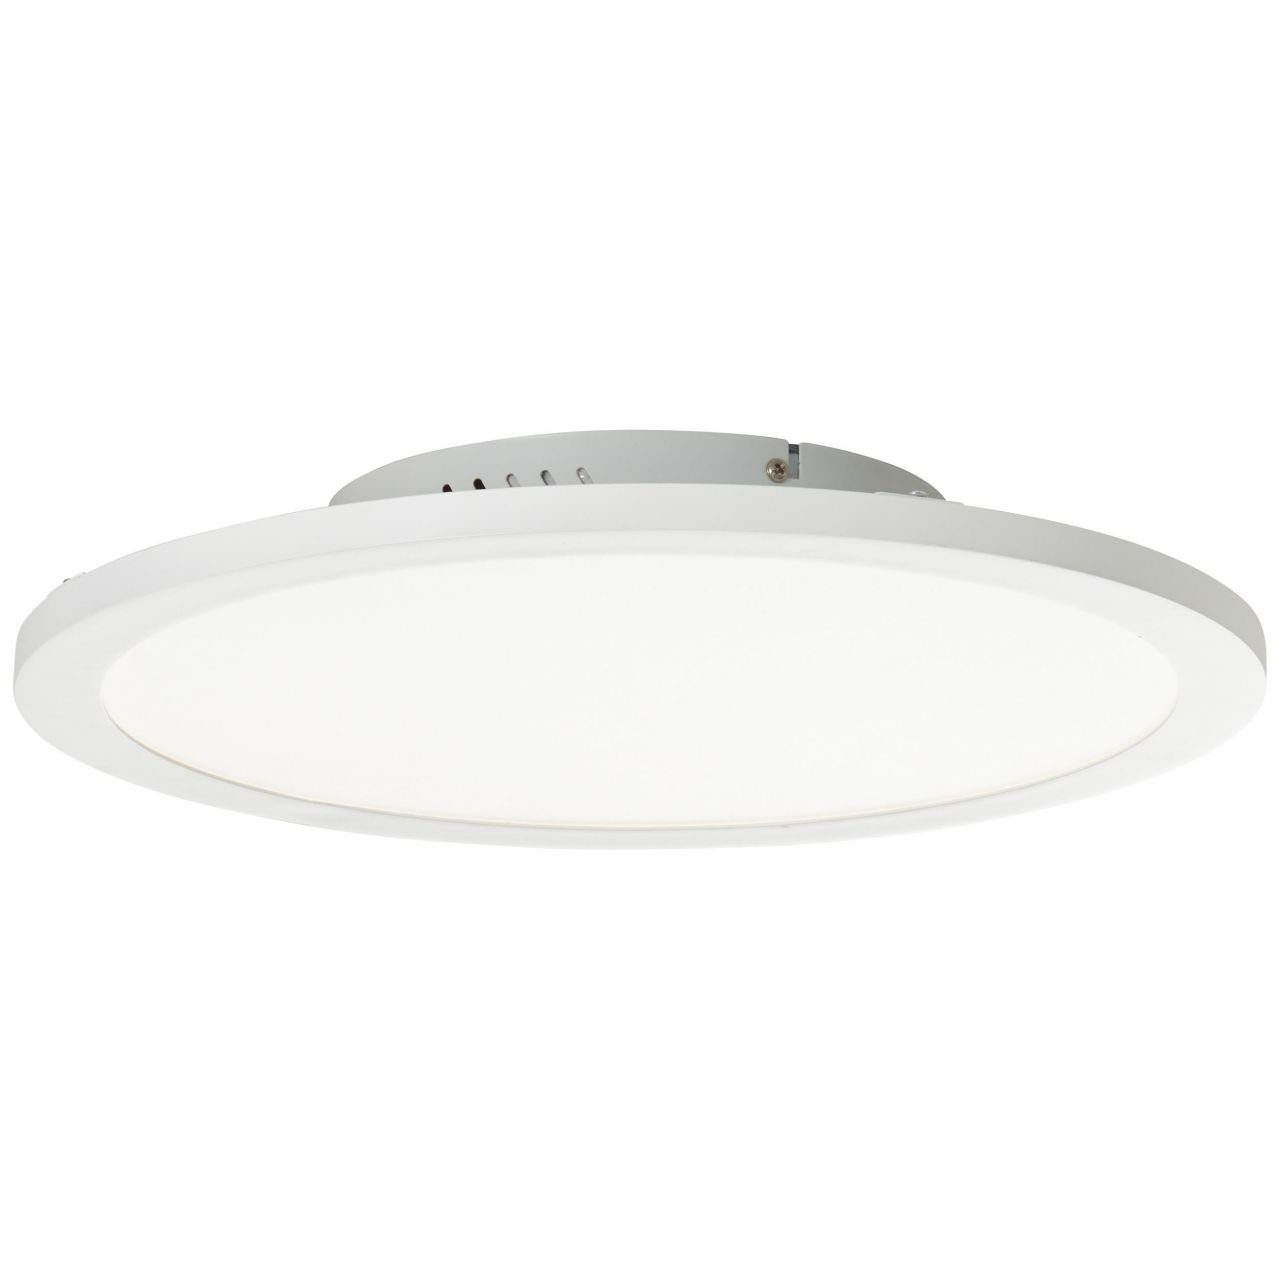 1x Aufbauleuchte weiß LED Abie, 2700-6200K, Deckenaufbau-Paneel Lampe Abie Brilliant LED integriert 24W 40cm